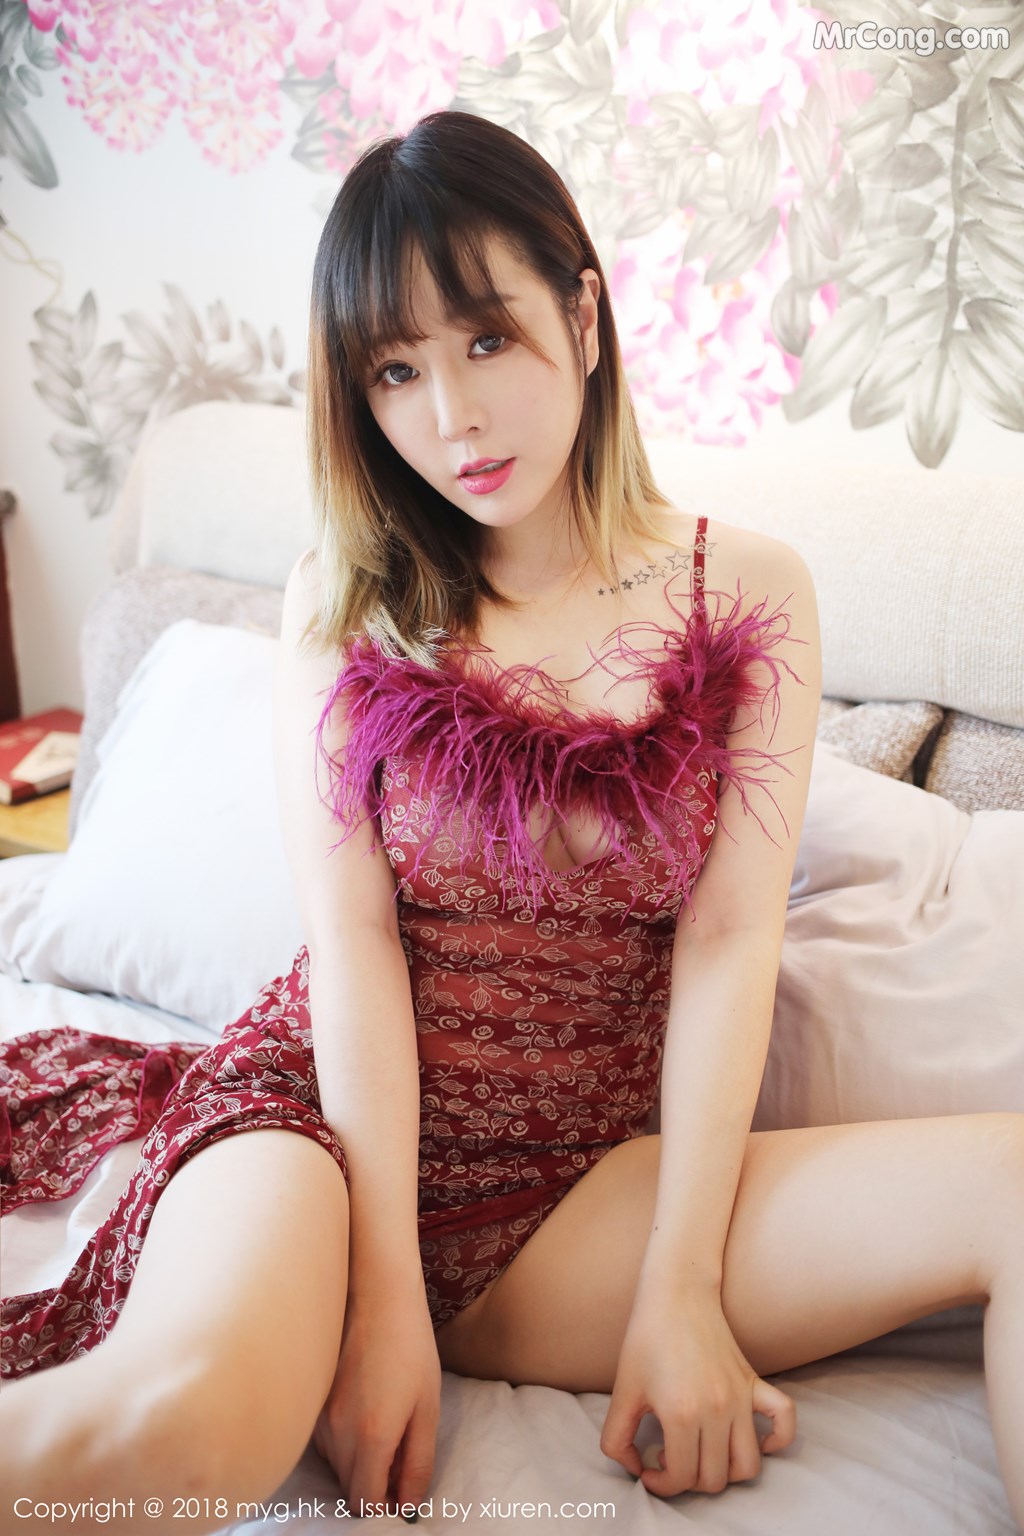 MyGirl Vol.309: Model Wang Yu Chun (王 雨 纯) (42 photos)